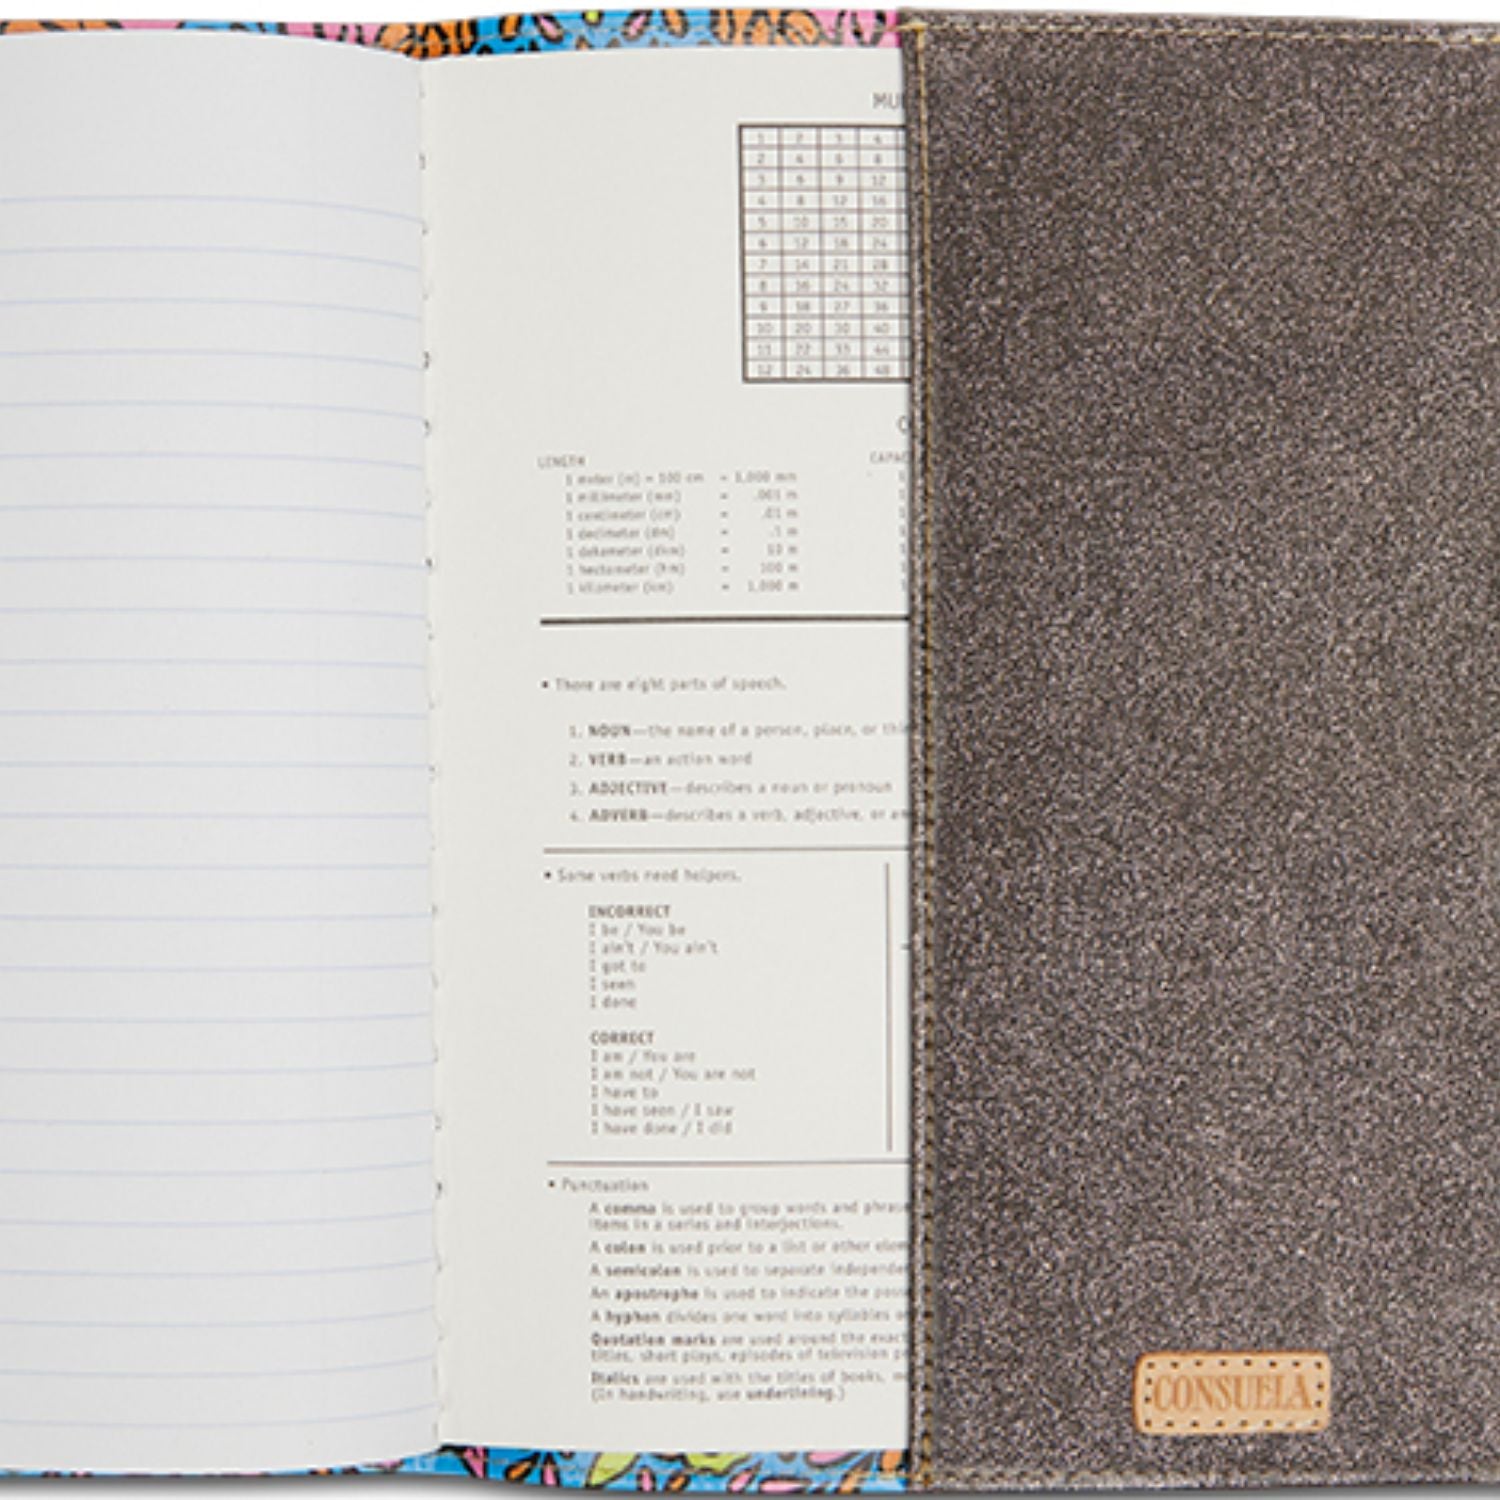 Consuela Notebook, Mandy |Stuffology Boutique-Journals-Consuela-Stuffology - Where Vintage Meets Modern, A Boutique for Real Women in Crosbyton, TX